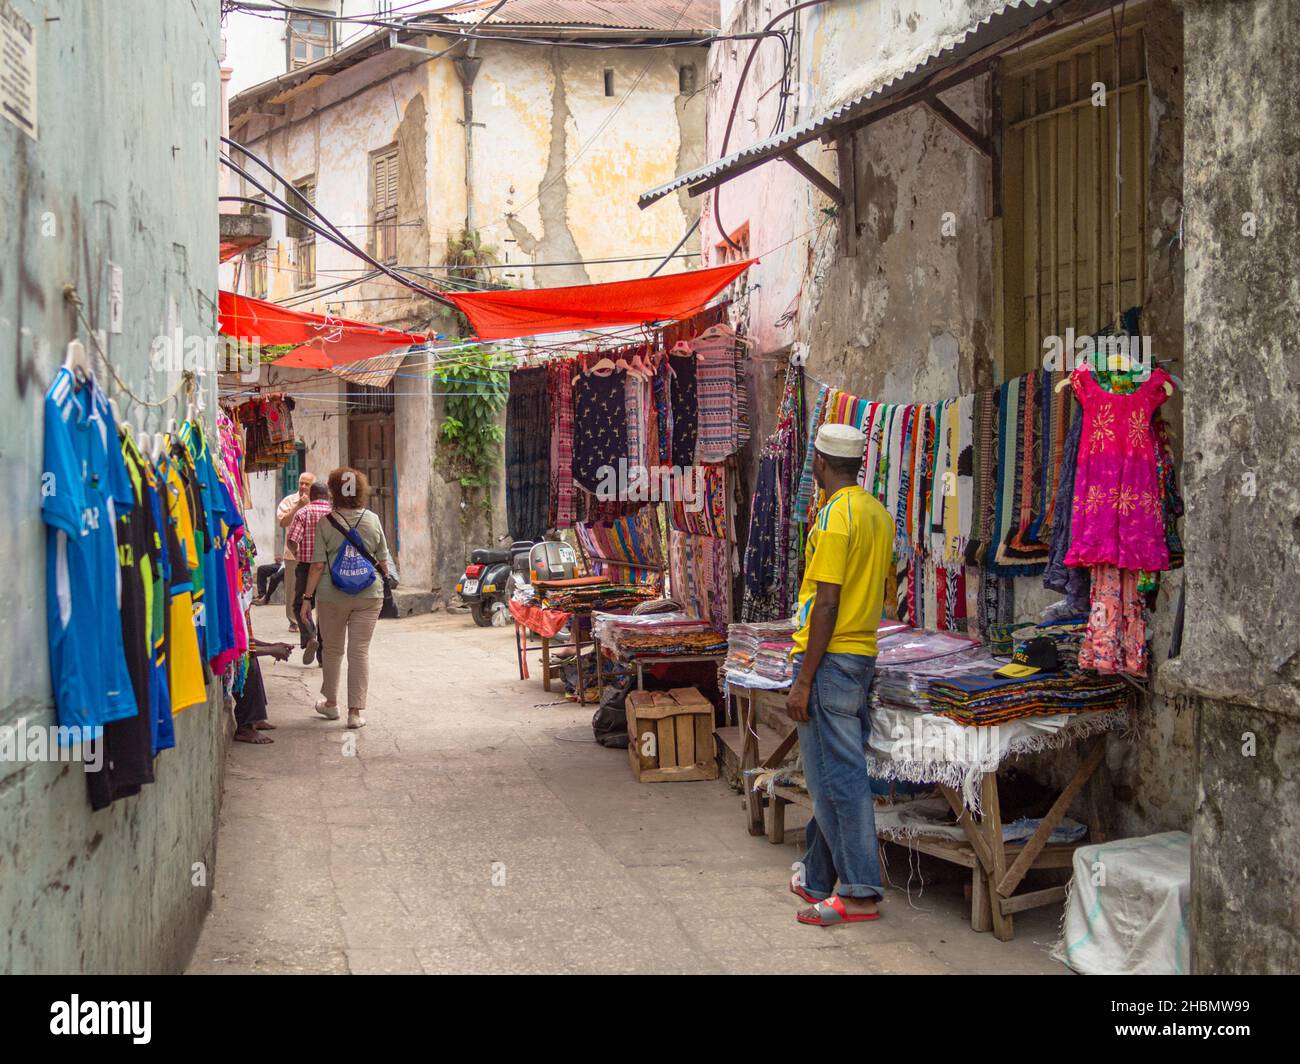 STONE TOWN, ZANZIBAR, TANZANIA - MARCH 13, 2017: Narrow Street with Tourists and Merchant Selling Colorful Fabrics in Stone Town, Zanzibar Stock Photo